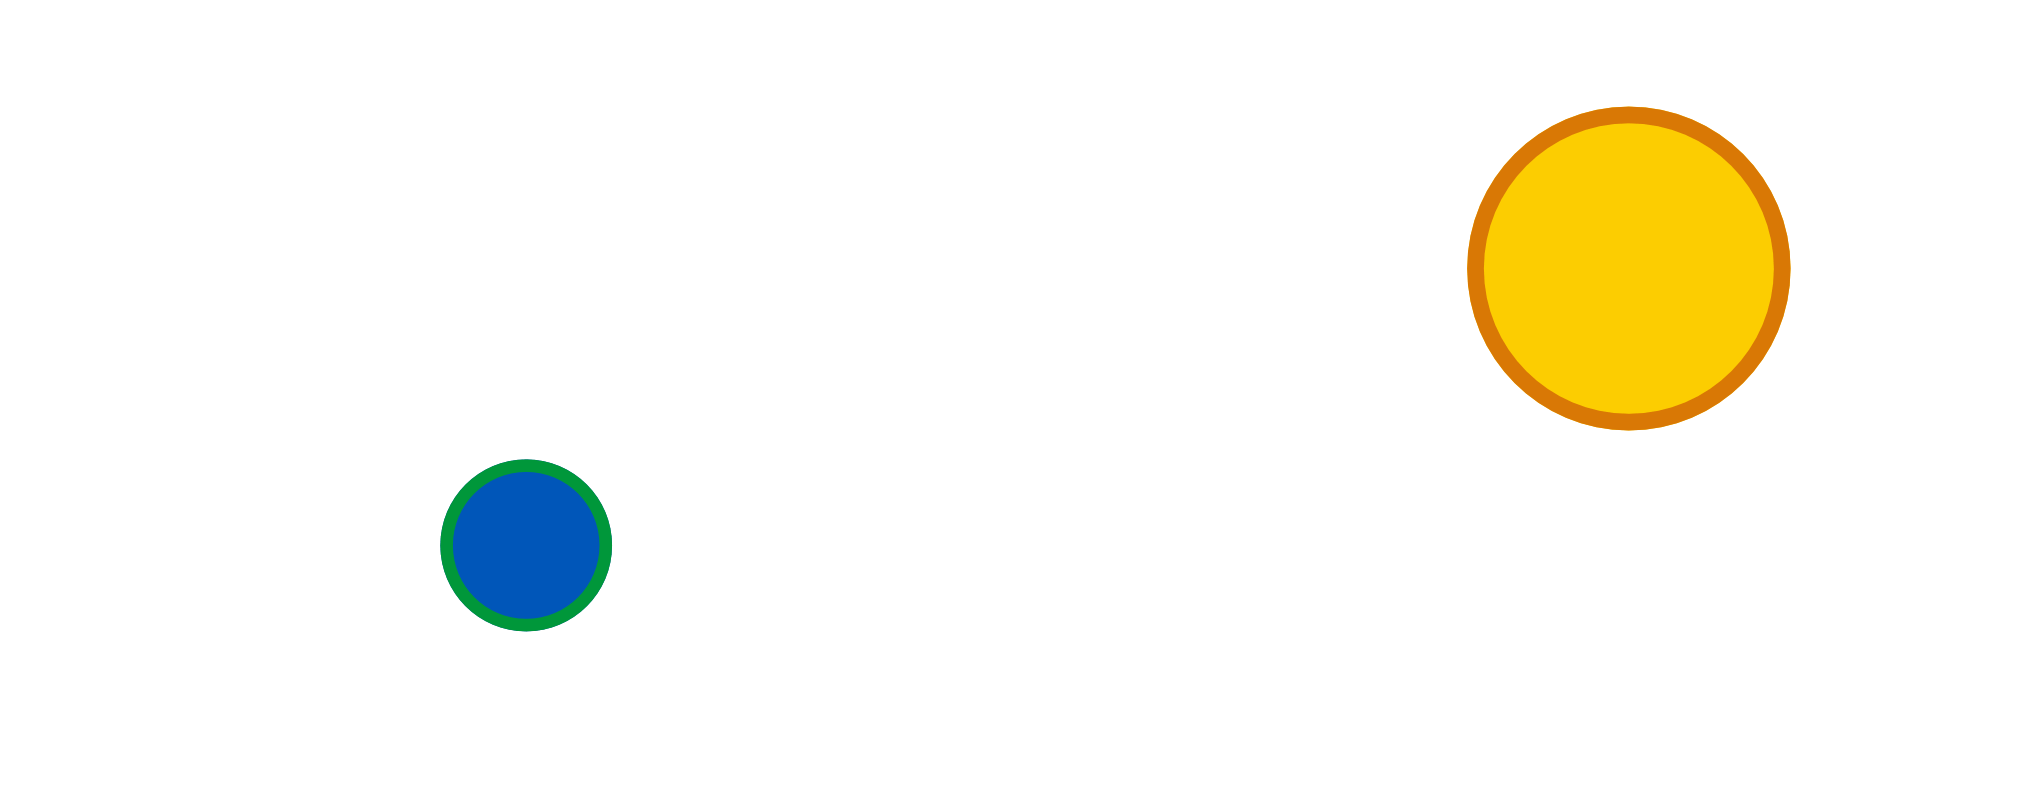 Abundant Power Group